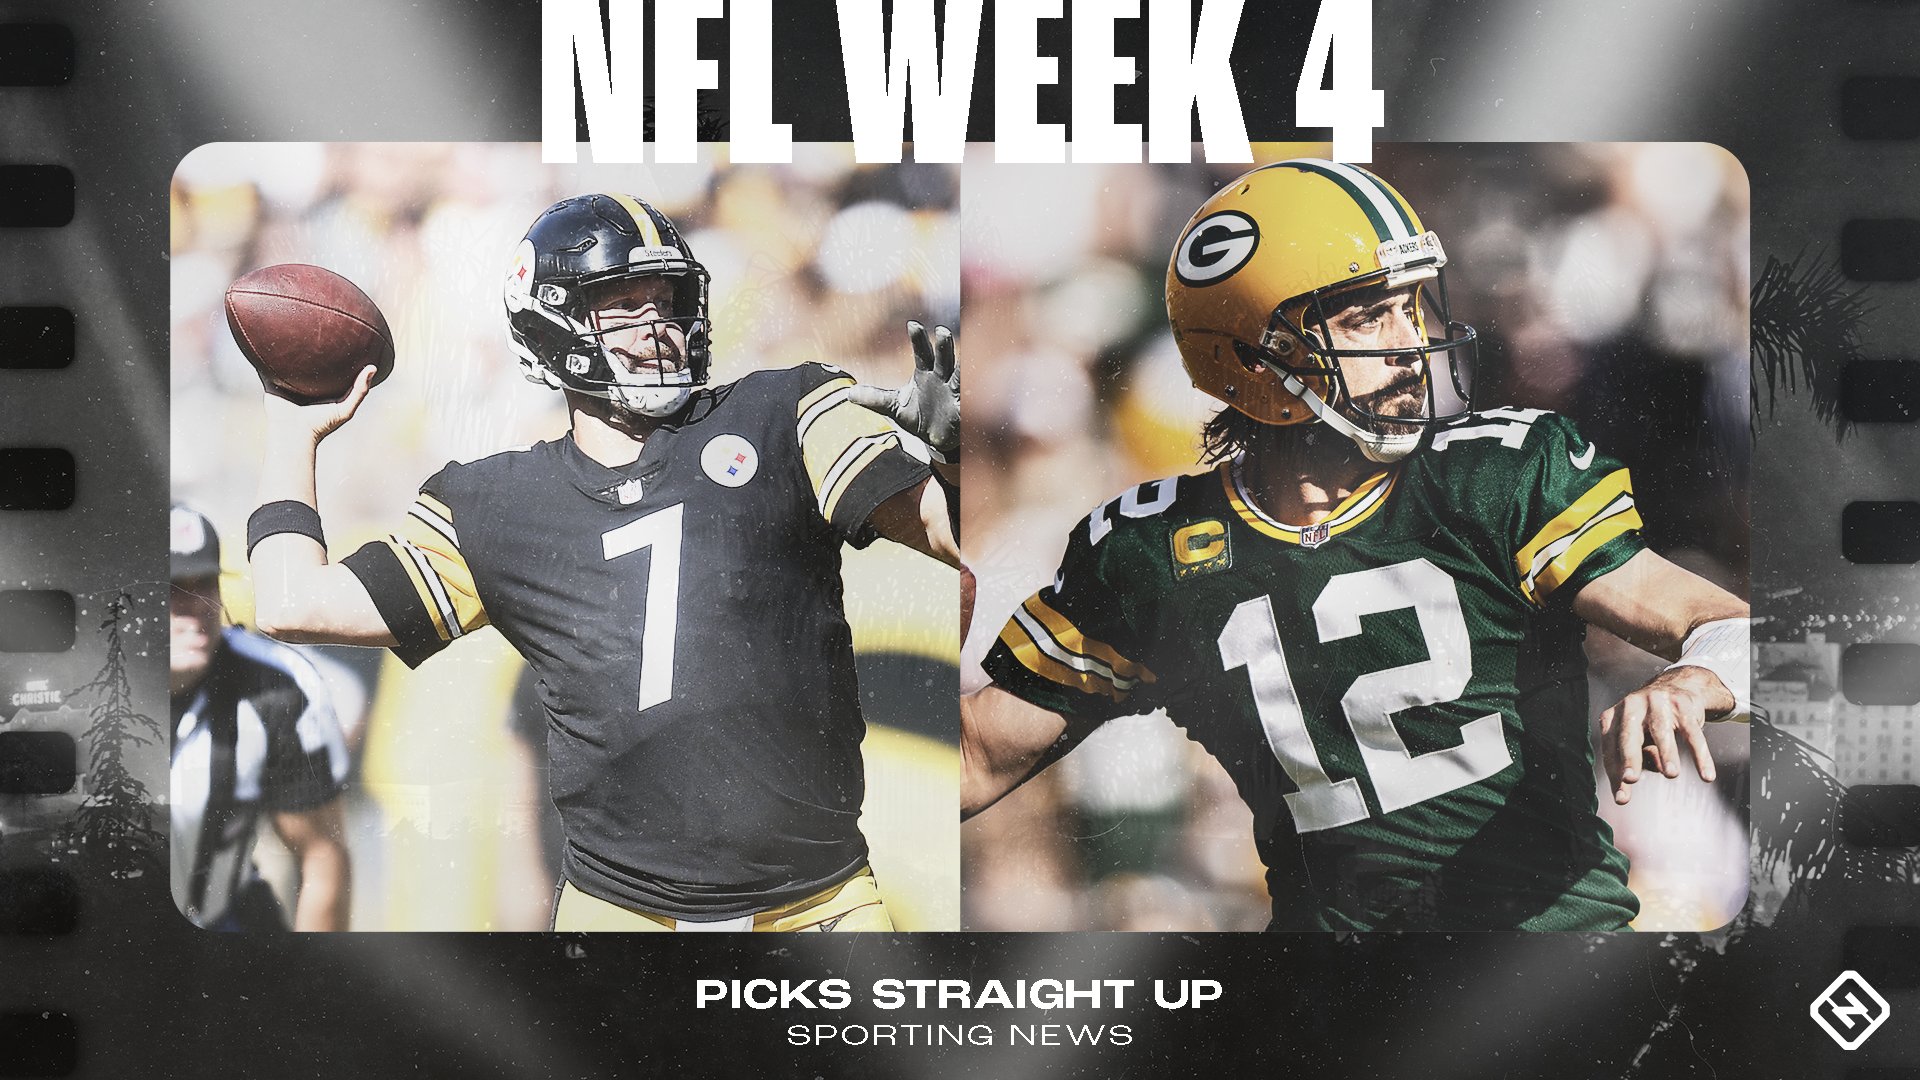 The Sporting News on Twitter: '#NFL Week 4 is here! SN breaks down